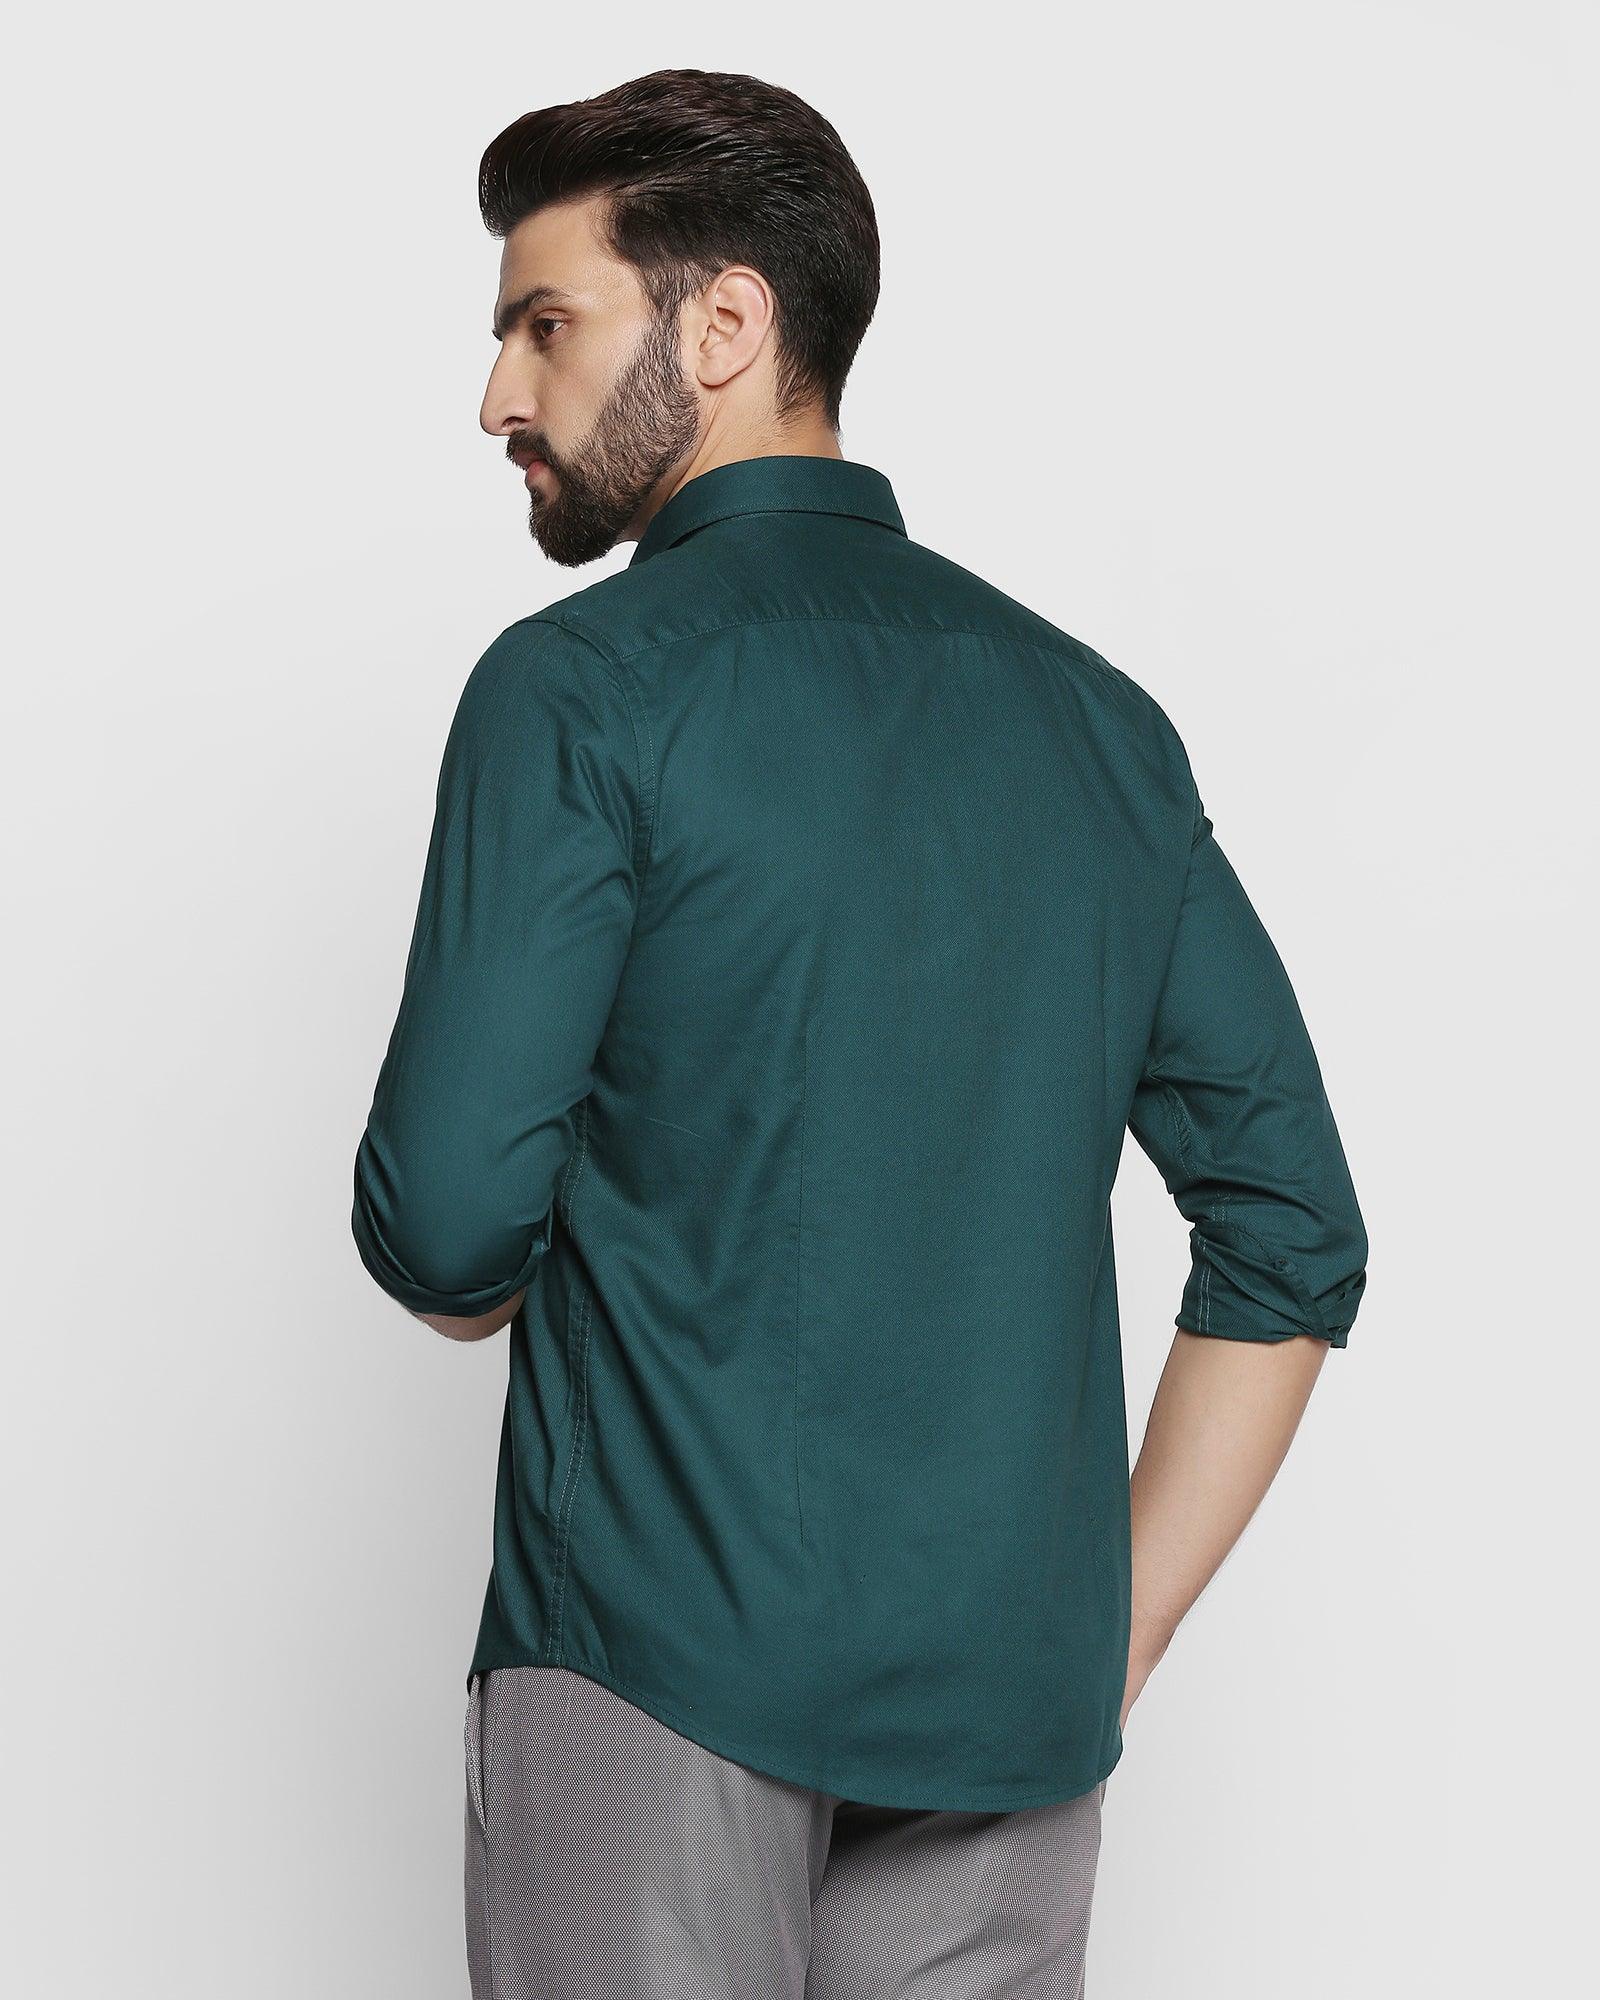 Casual Dark Green Solid Shirt - Lure